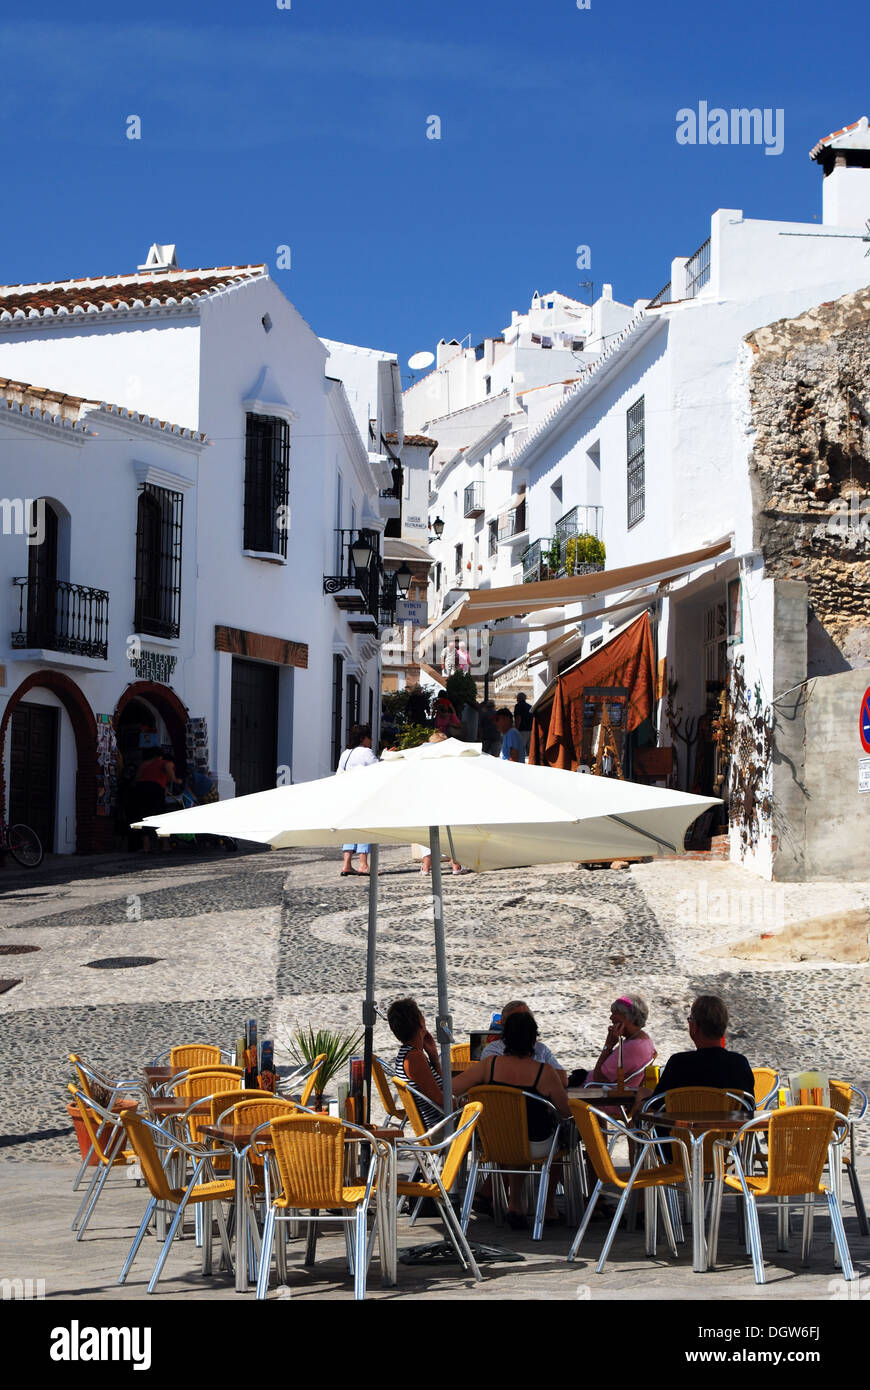 Village Street e Pavement Cafe, imbiancato village (pueblo blanco), Frigiliana, Spagna, Europa occidentale. Foto Stock